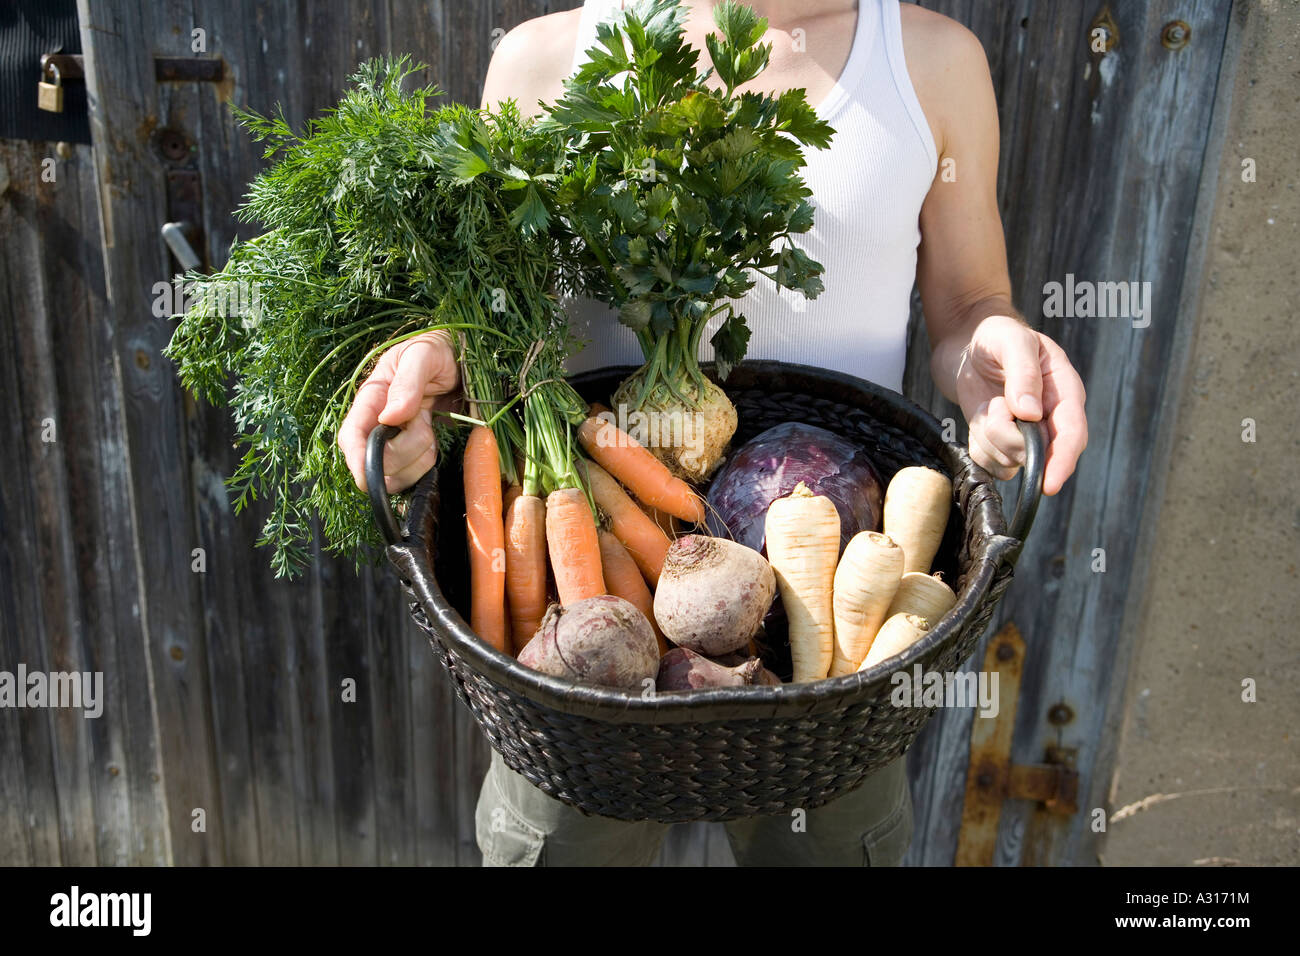 Man holding freshly picked vegetables in basket Stock Photo